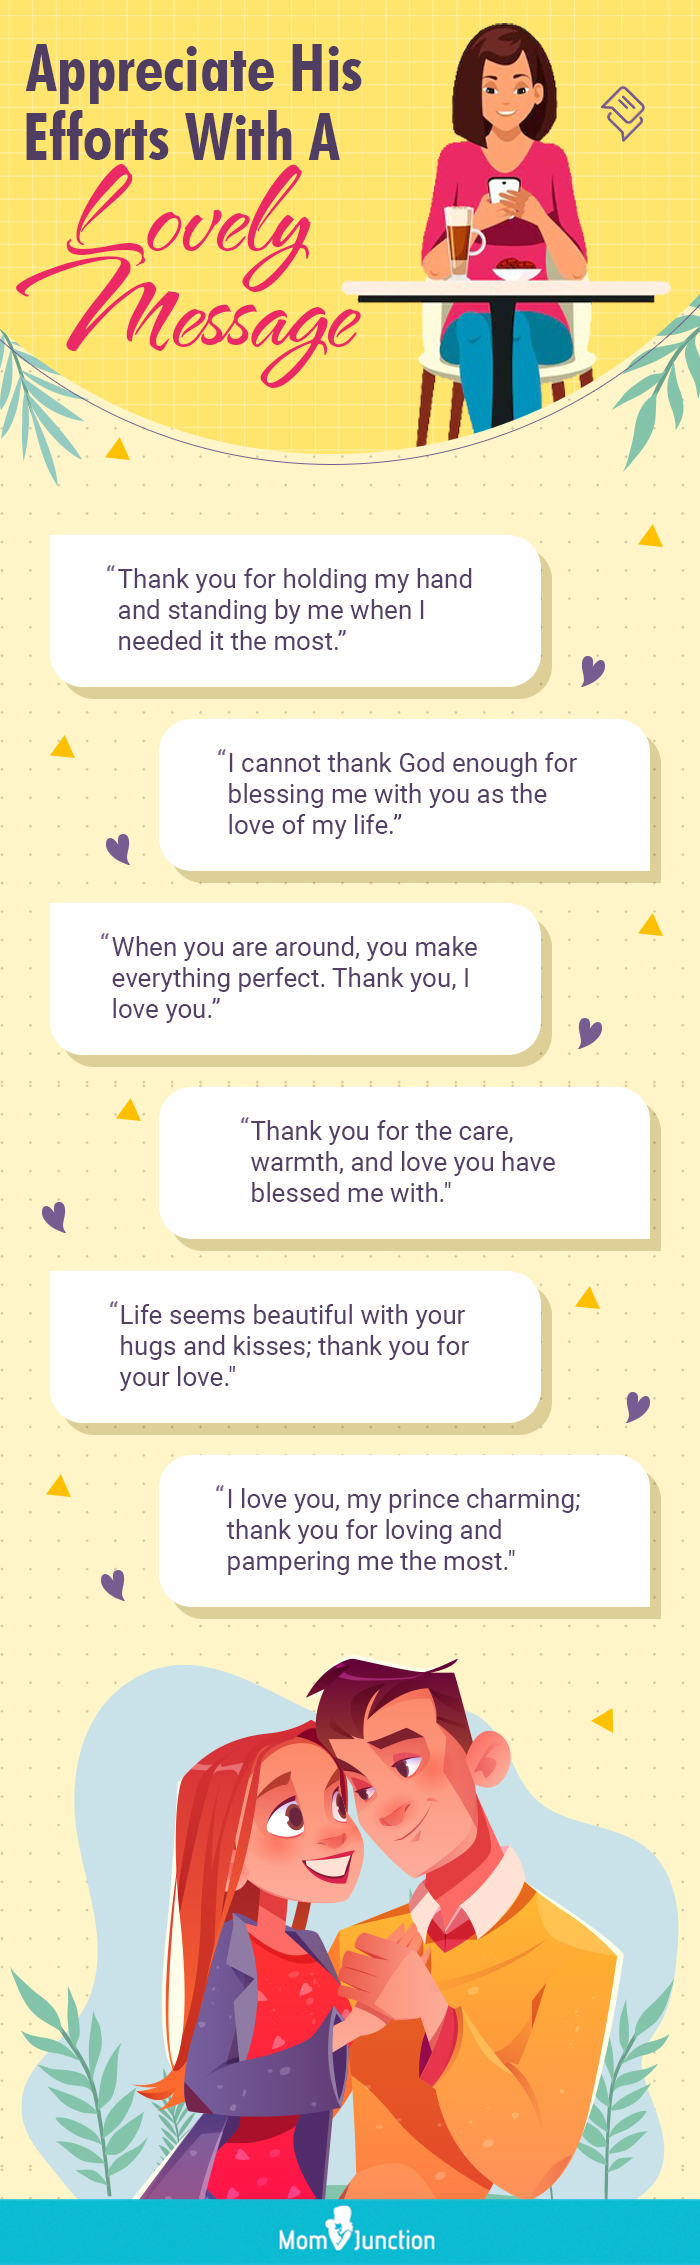 romantic messages for boyfriend [infographic]